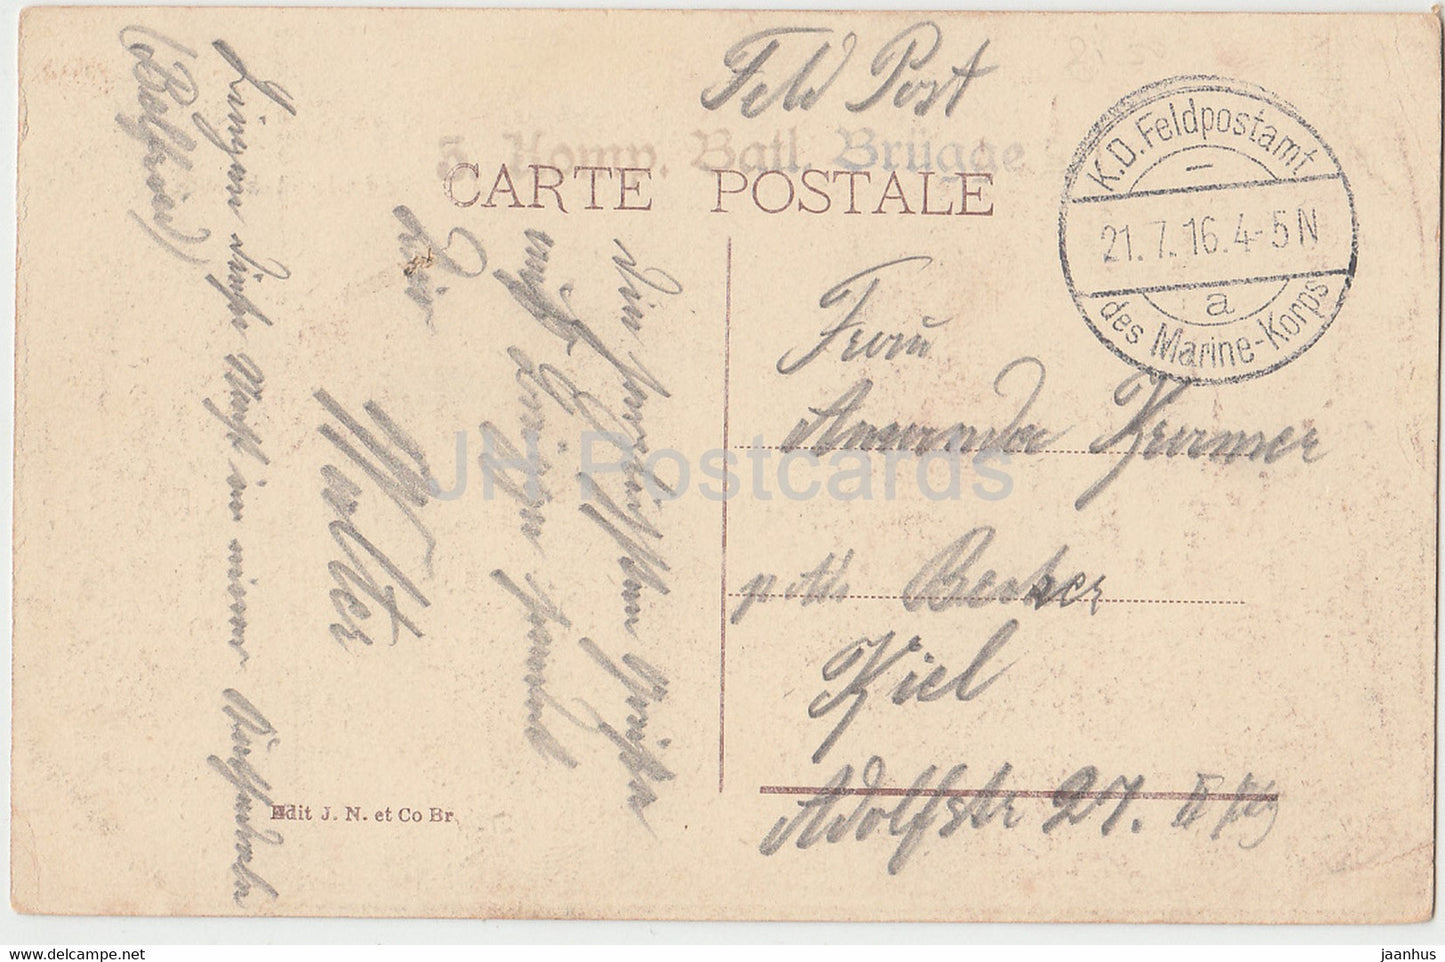 Gand - Gent - La Cathedrale St Bavon - Kathedrale - 4 Komp Batl Brugge - Feldpost - alte Postkarte - 1916 - Belgien - gebraucht